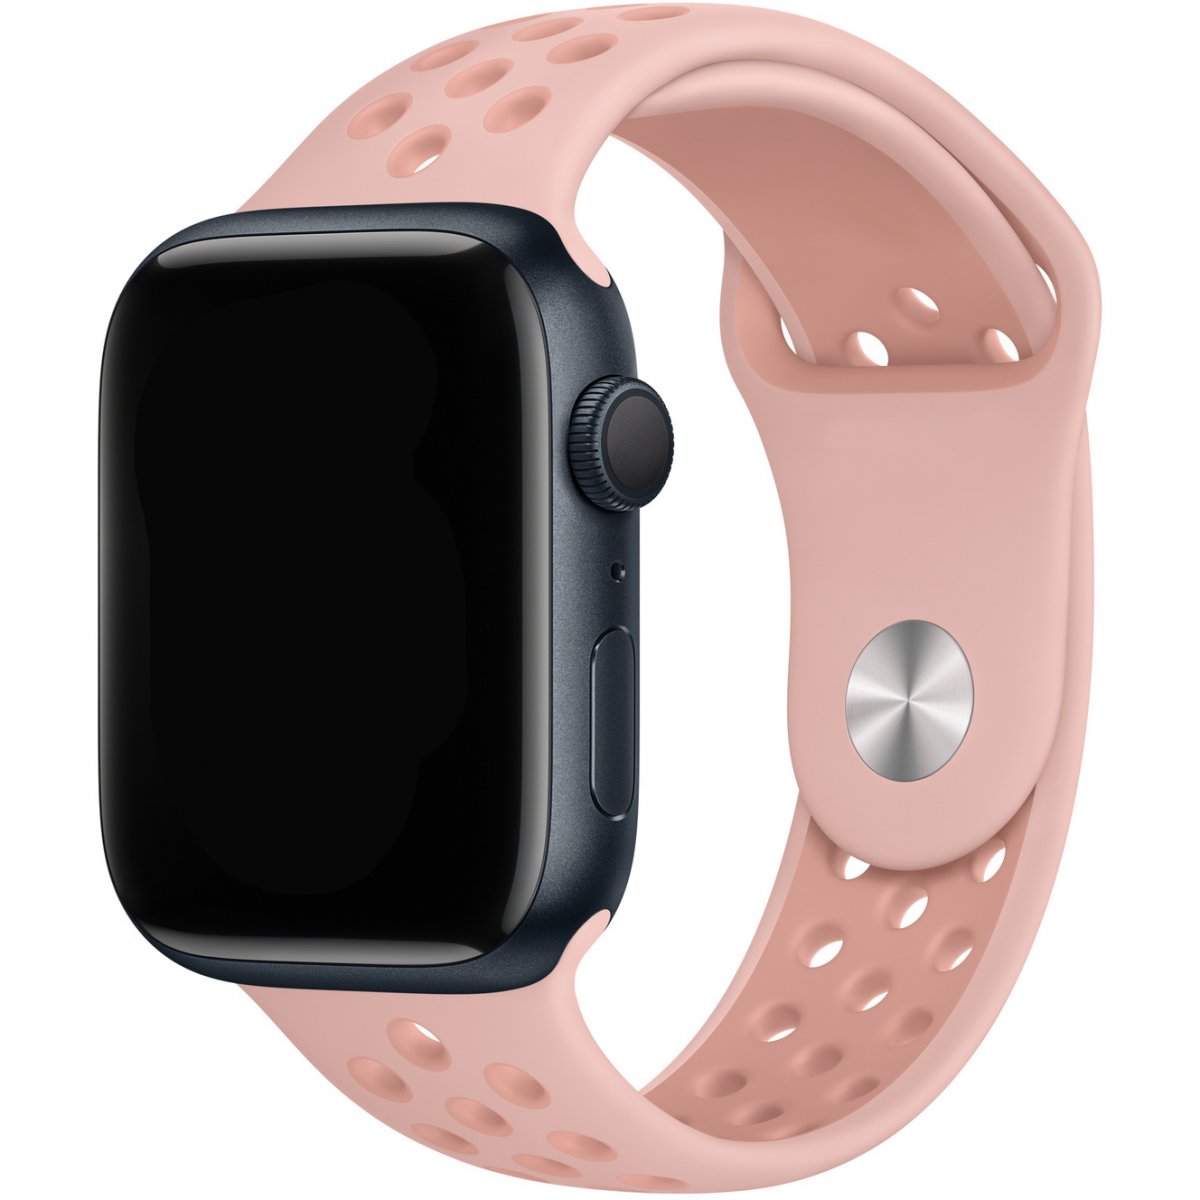 Řemínek SPORT pro Apple Watch Series 1/2/3 (42mm) - Pink Oxford/Rose Whisper